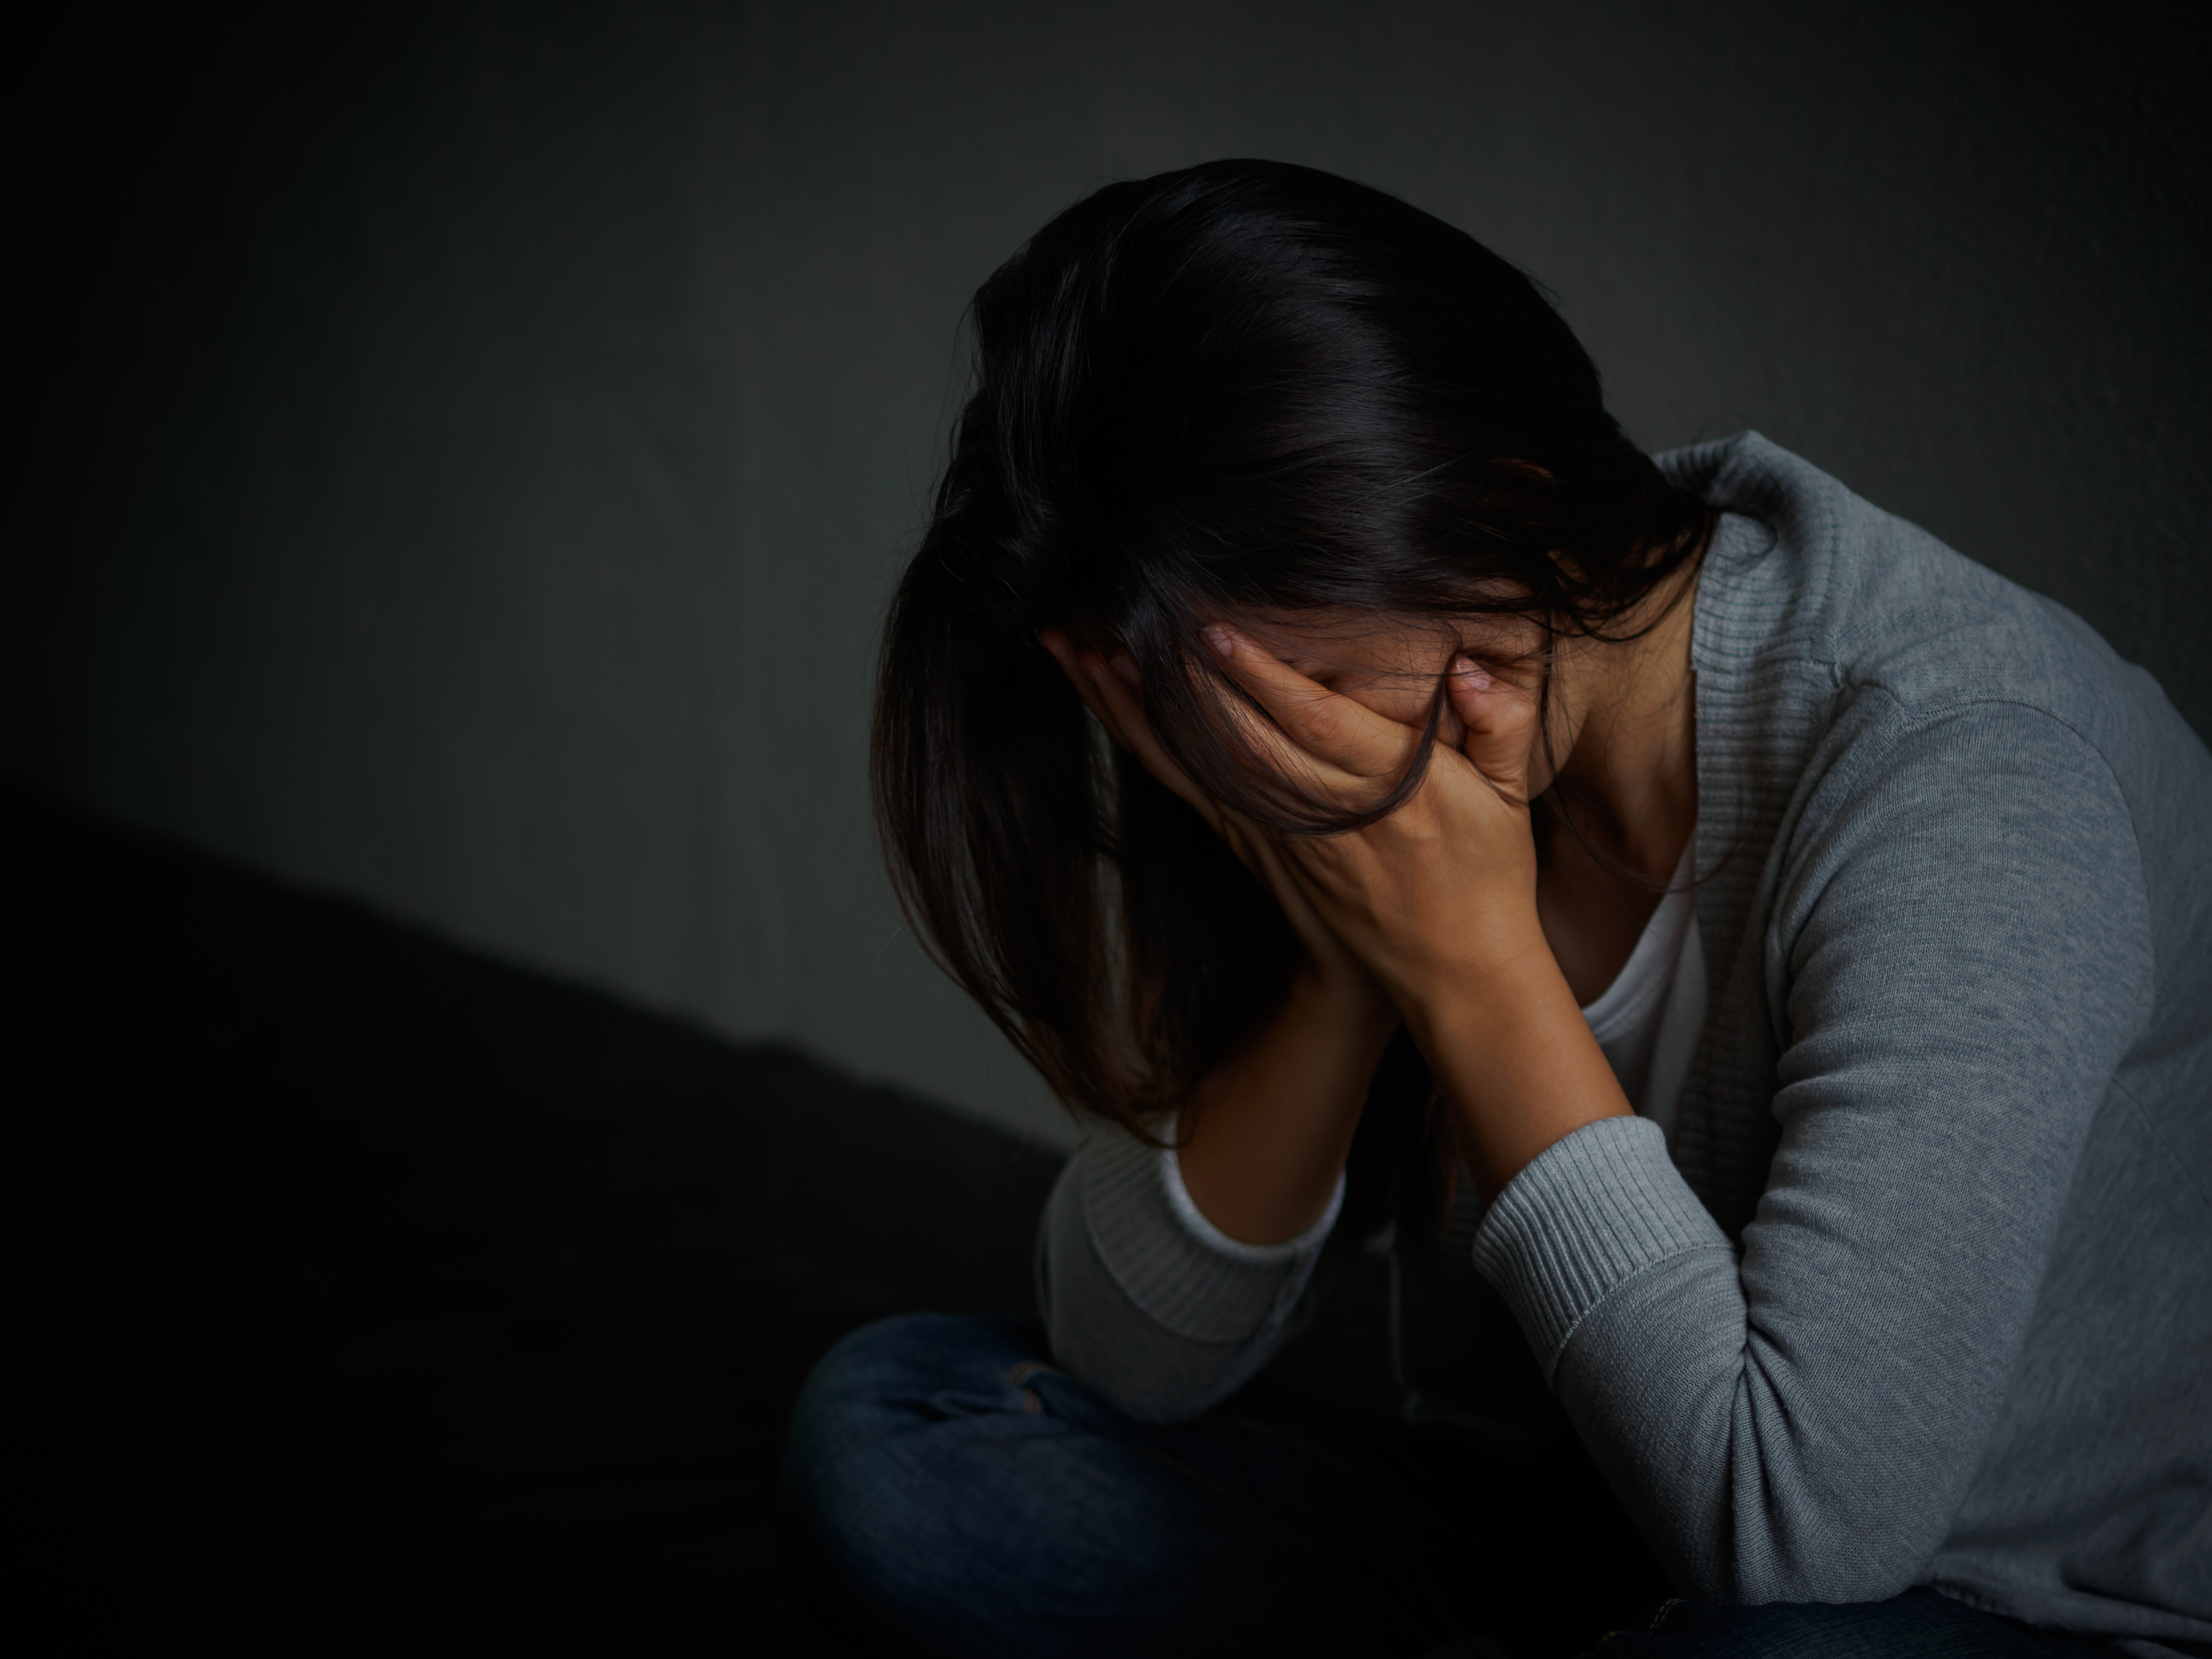 Sad woman hug her knee and cry. | Source: Shutterstock